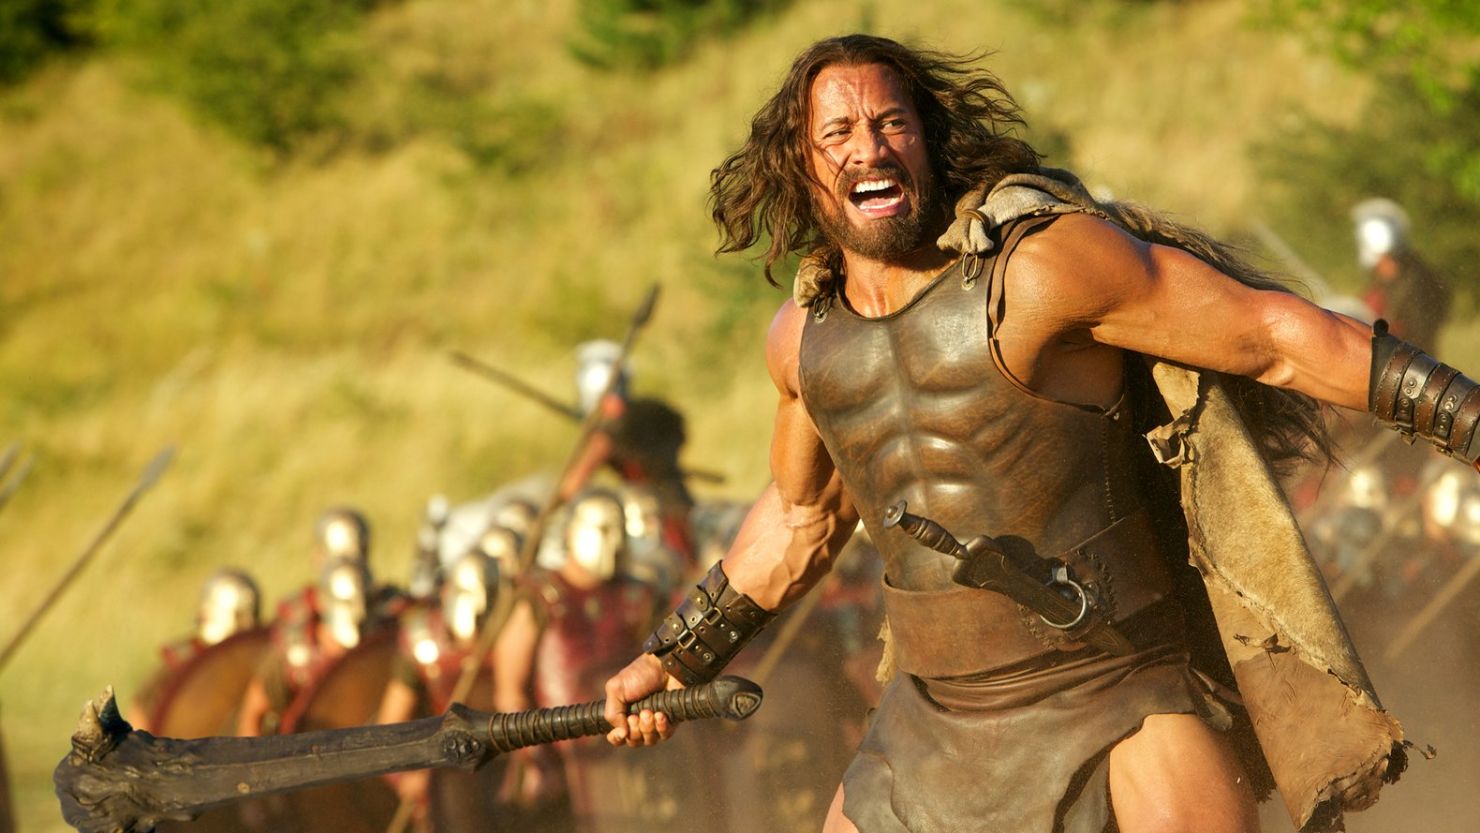  Dwayne Johnson stars in the action film 'Hercules."